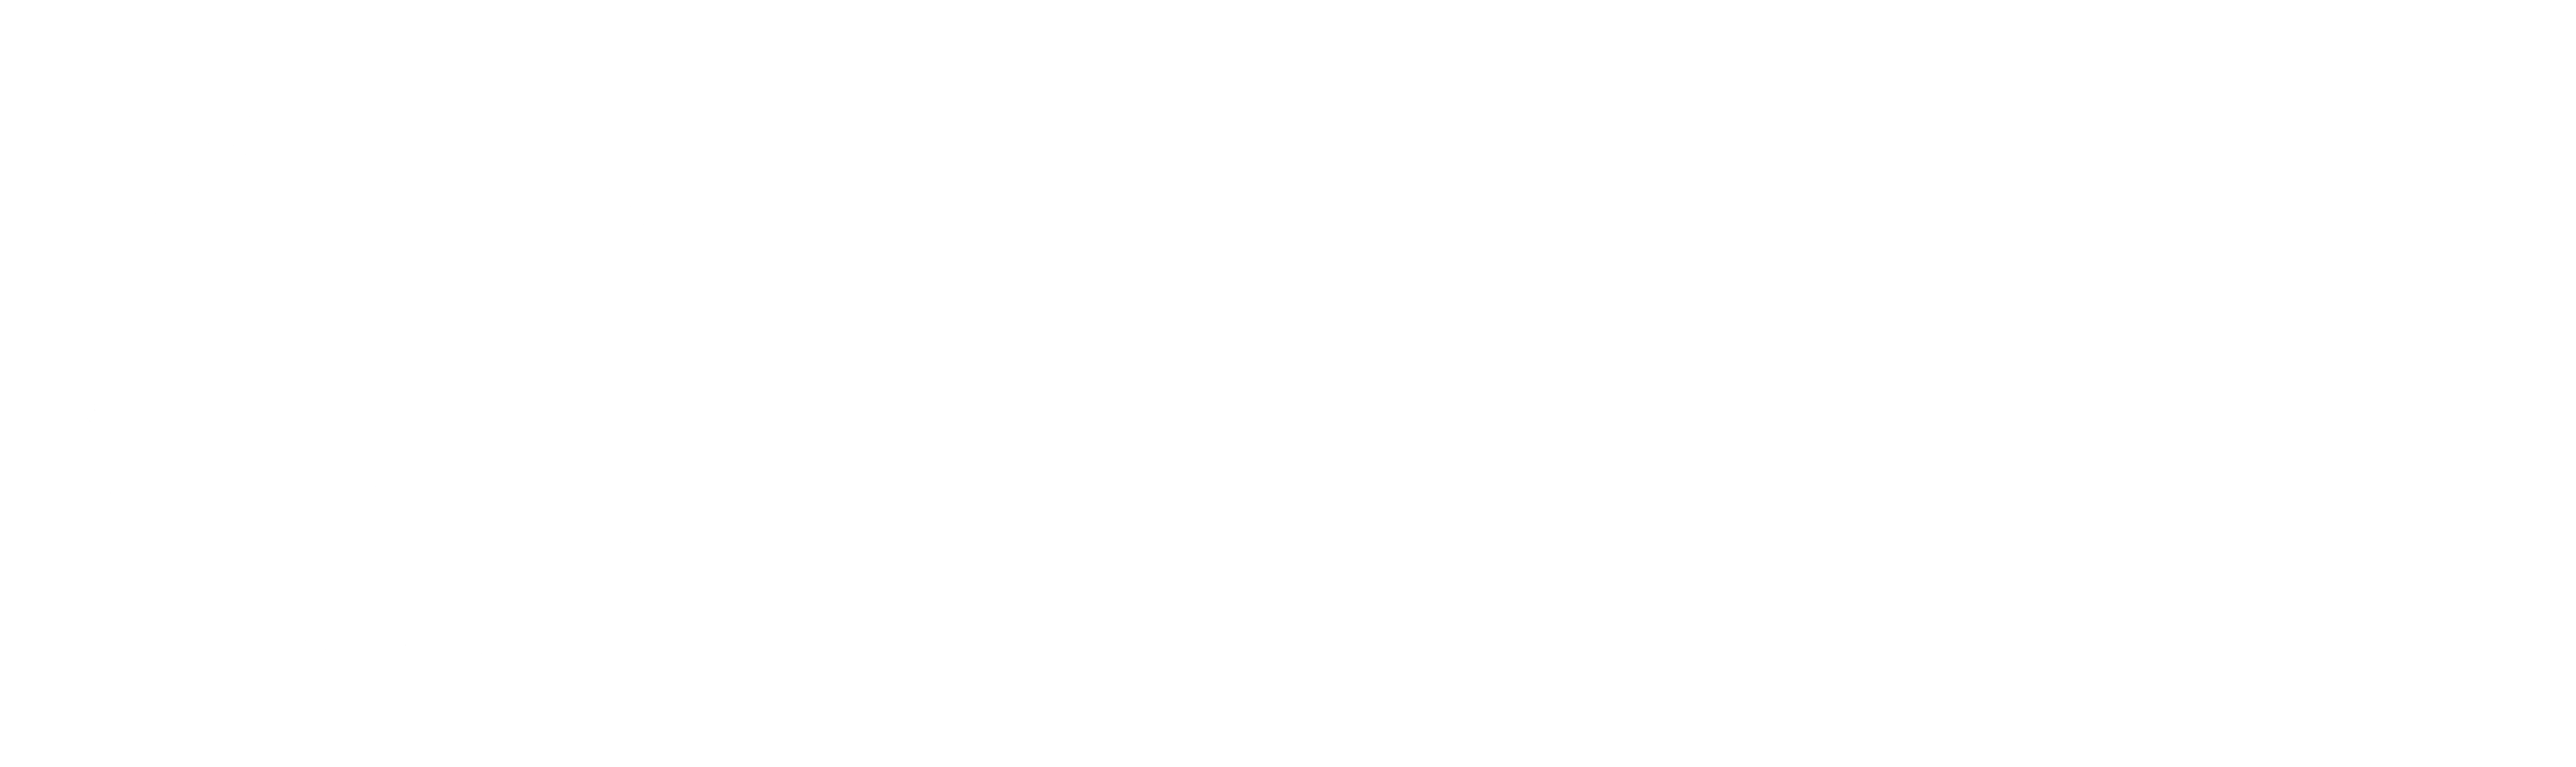 COMPUTATIONAL MEDICINE & TECHNOLOGY LAB